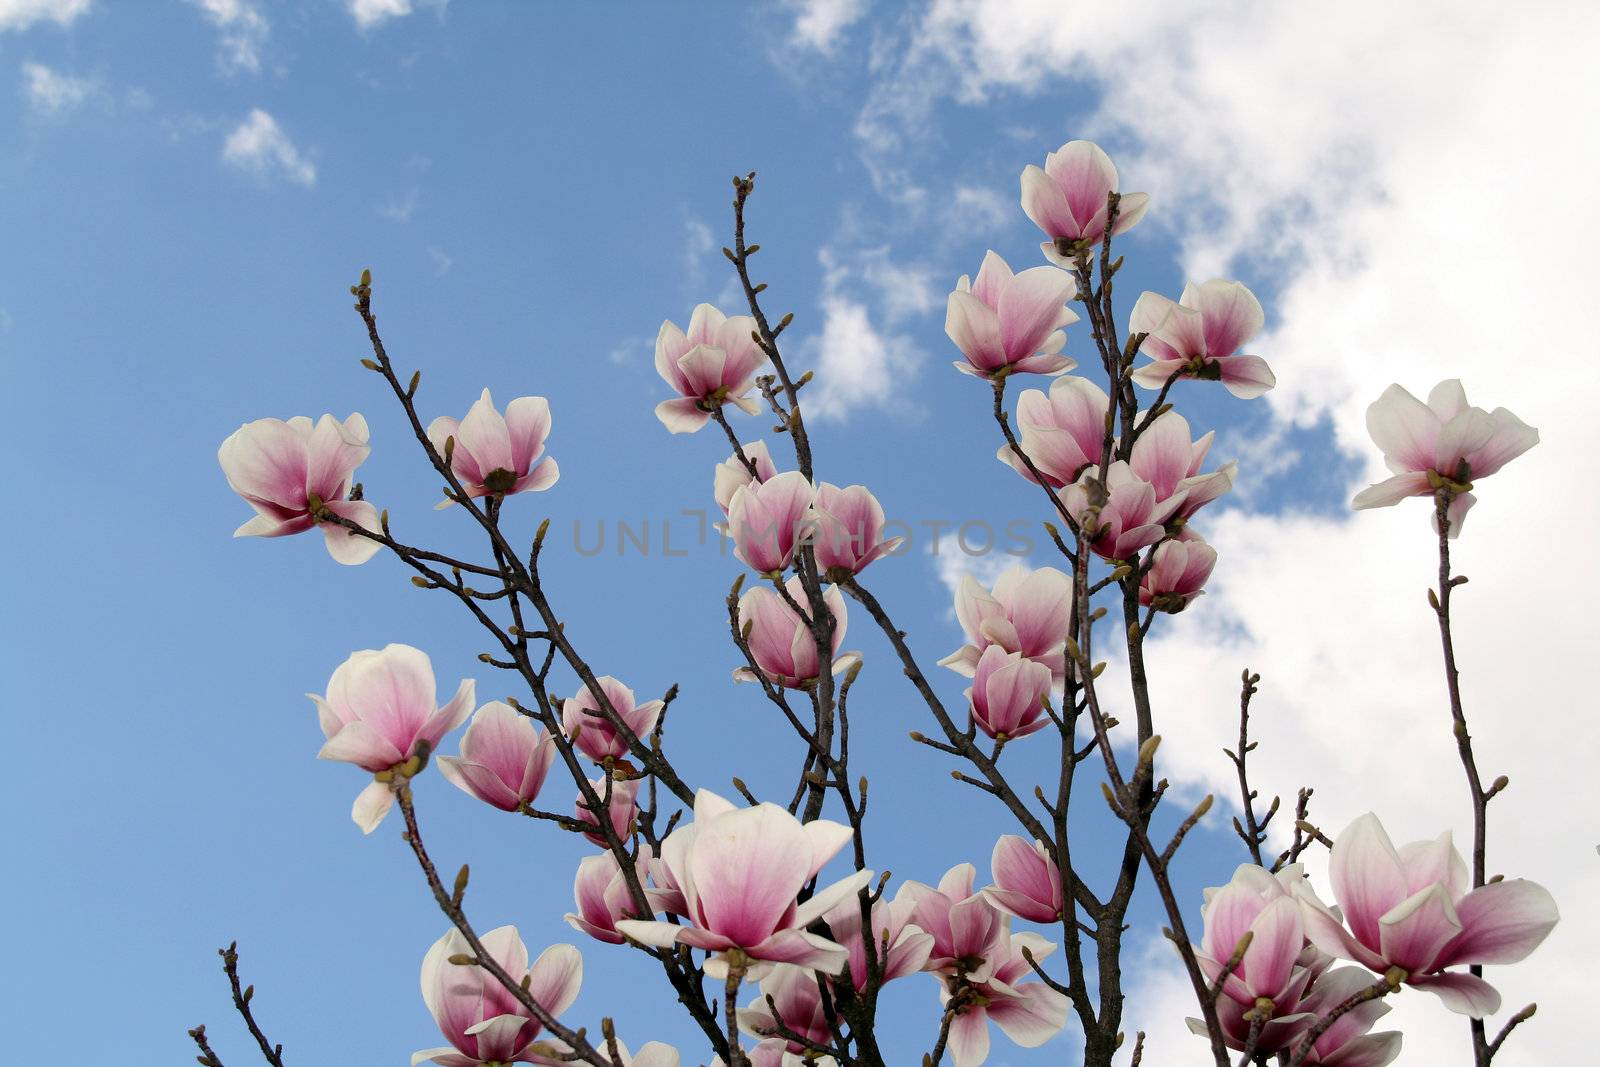 Magnolia Flower by jpcasais